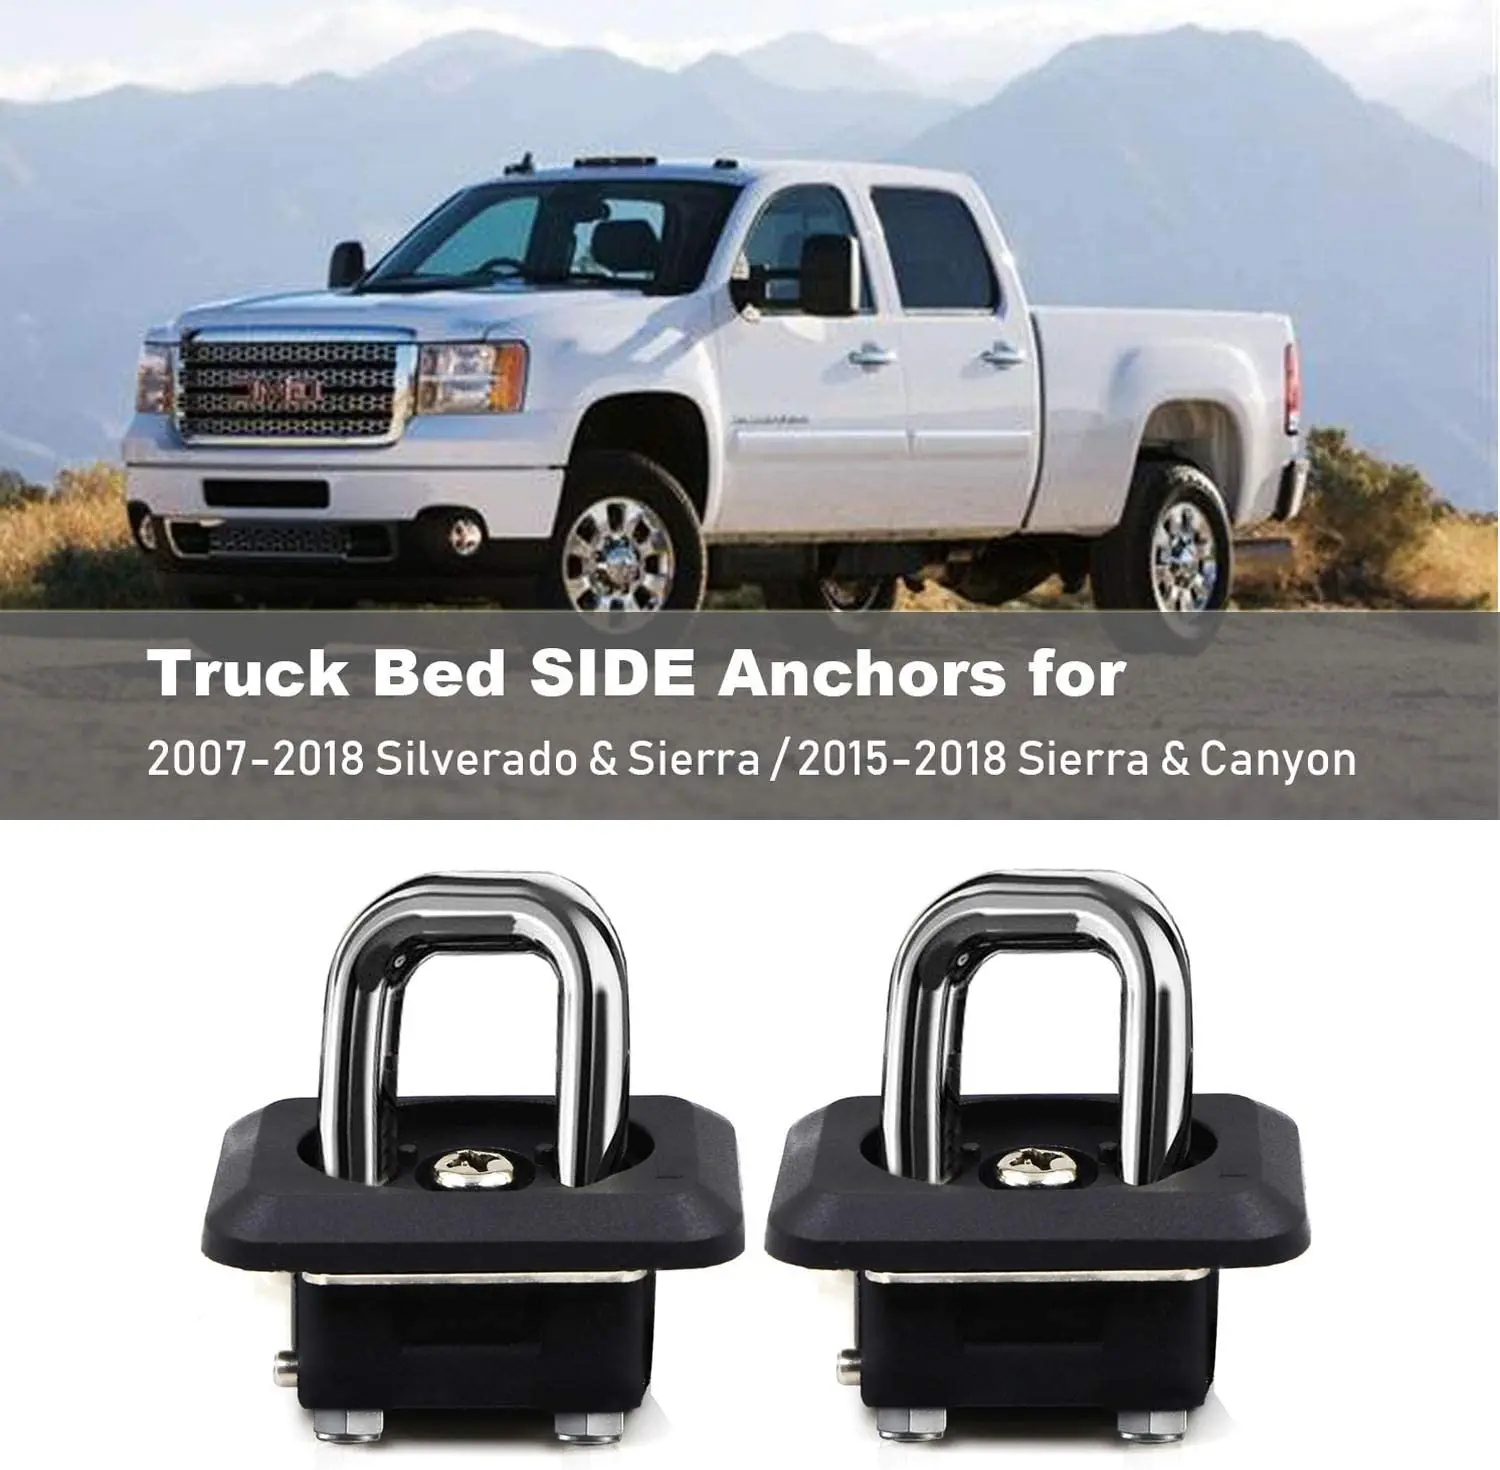 

2PCS Tie Down Anchors Retractable Truck Bed Side Wall Anchors for 2007-2019 Silverado & Sierra, 2015-2019 Colorado & Canyon